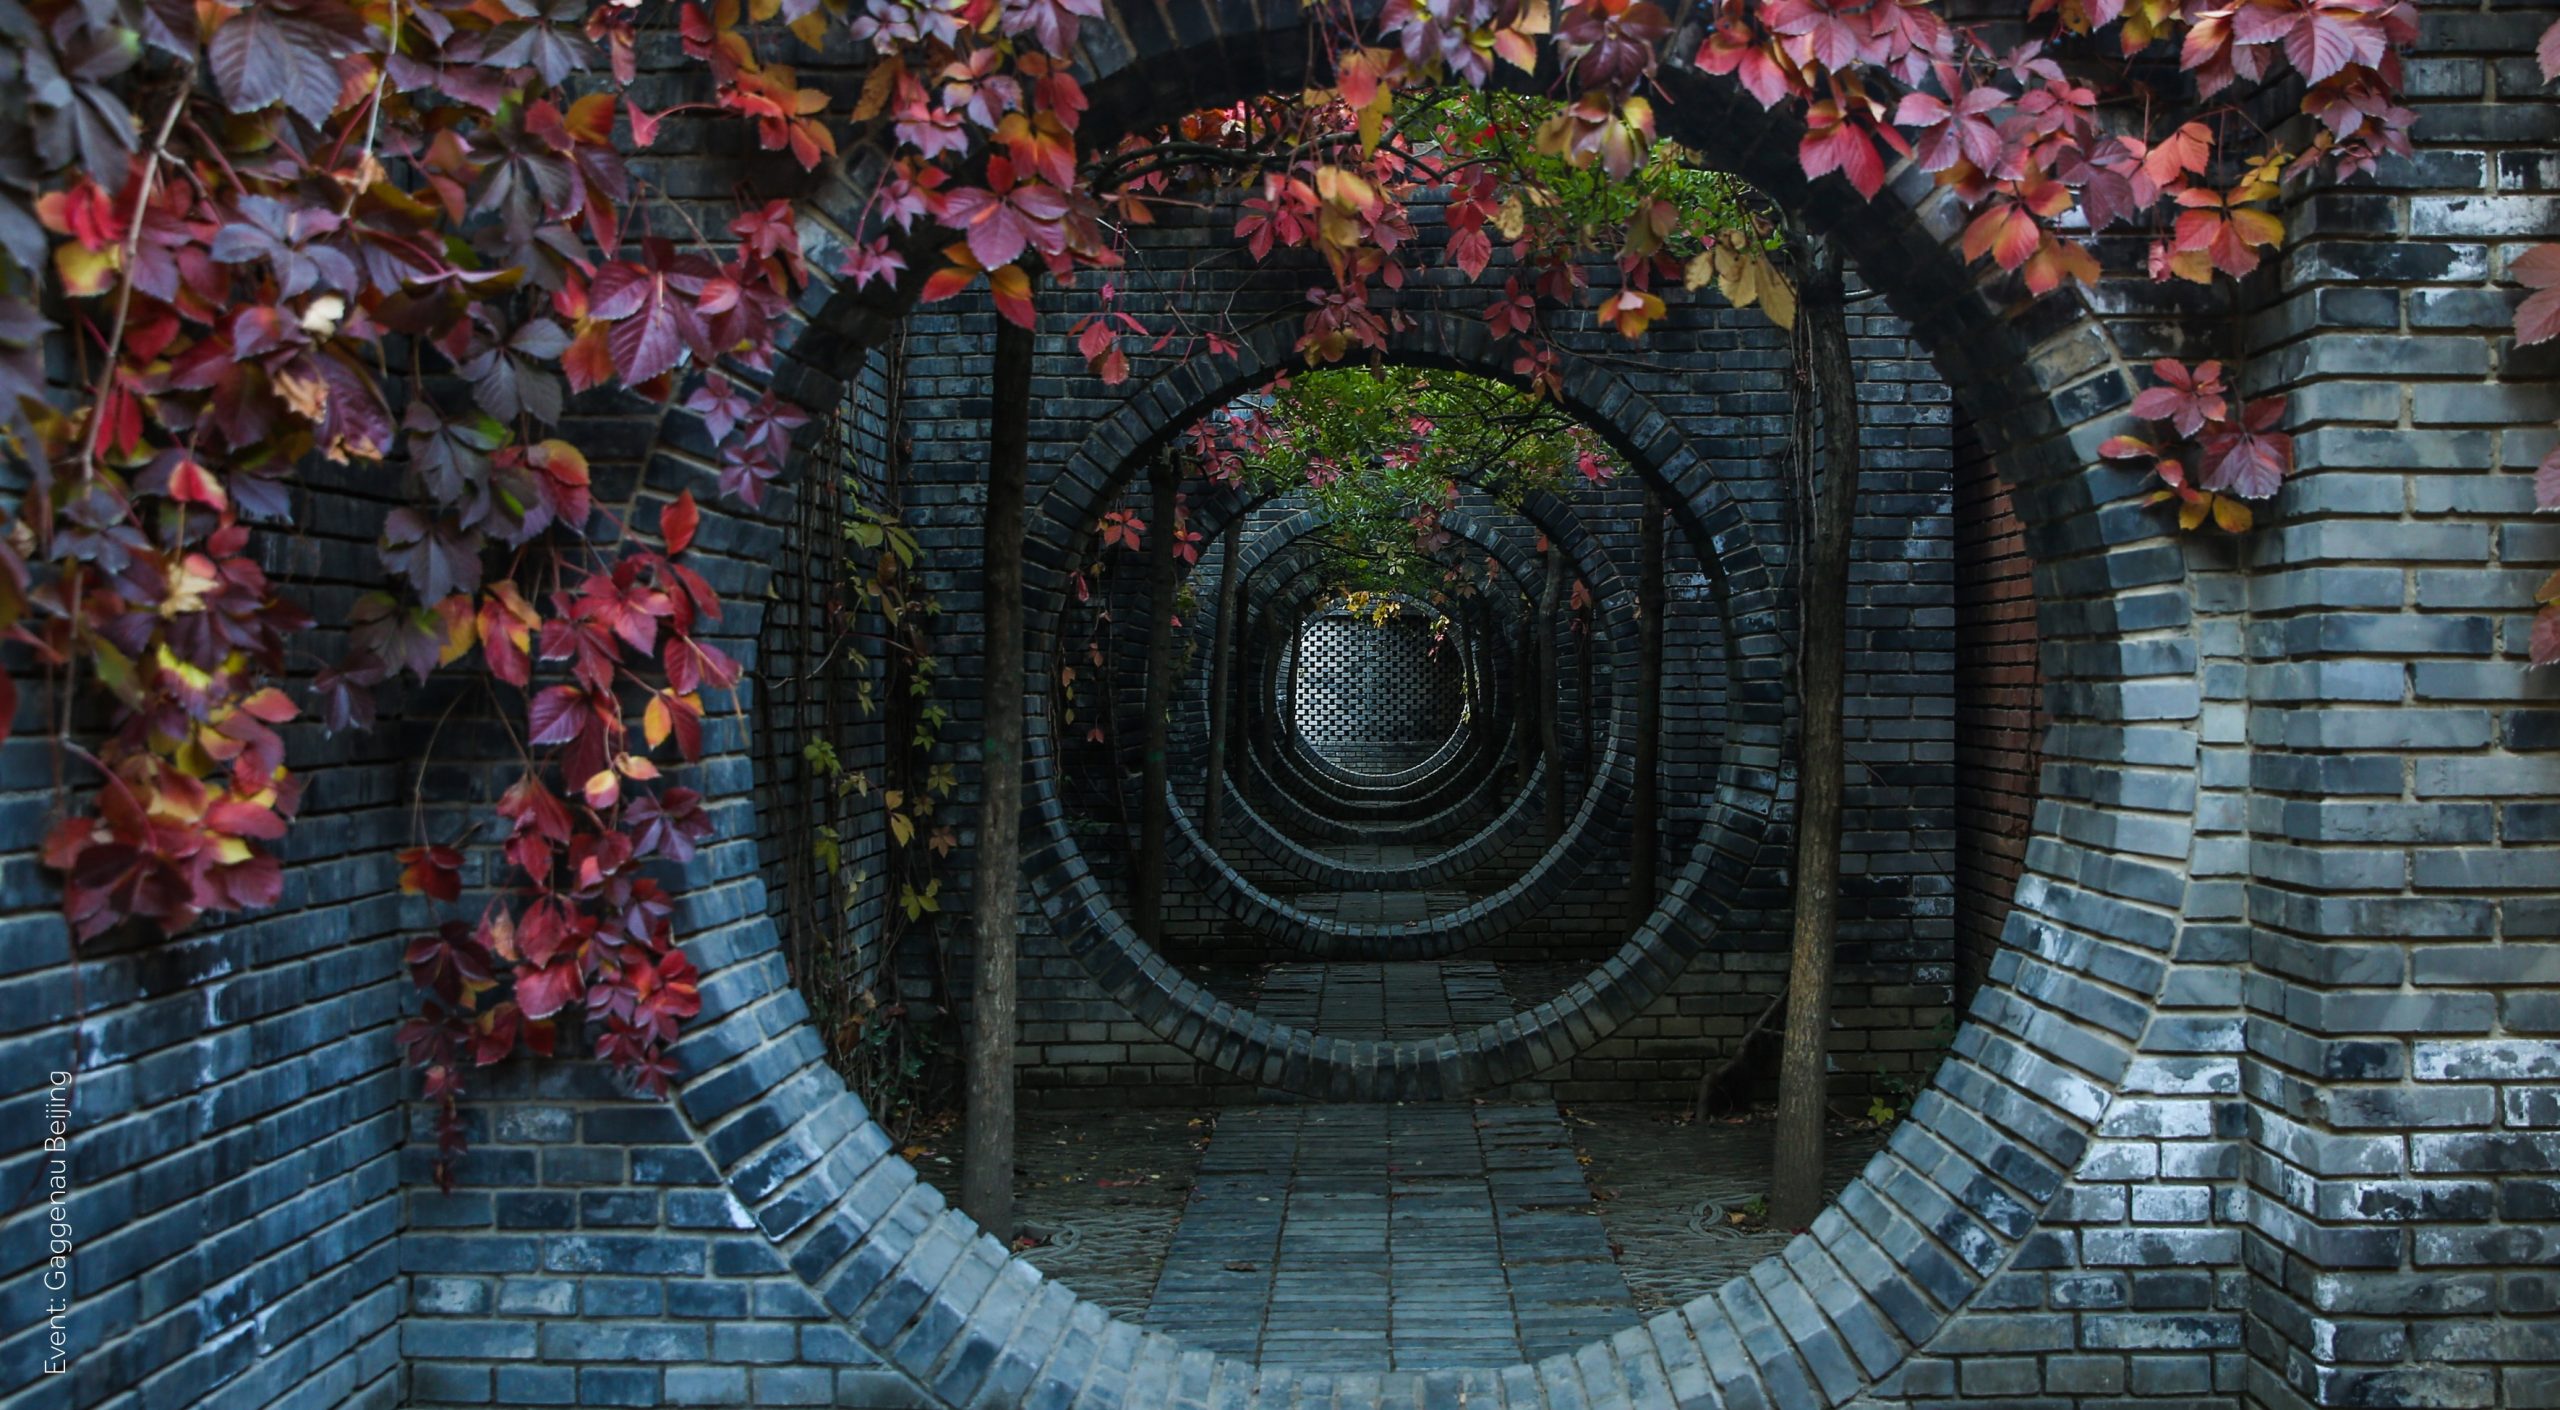 Archway, Red Brick Art Museum, Beijing China, International Gaggenau Sommelier Awards event